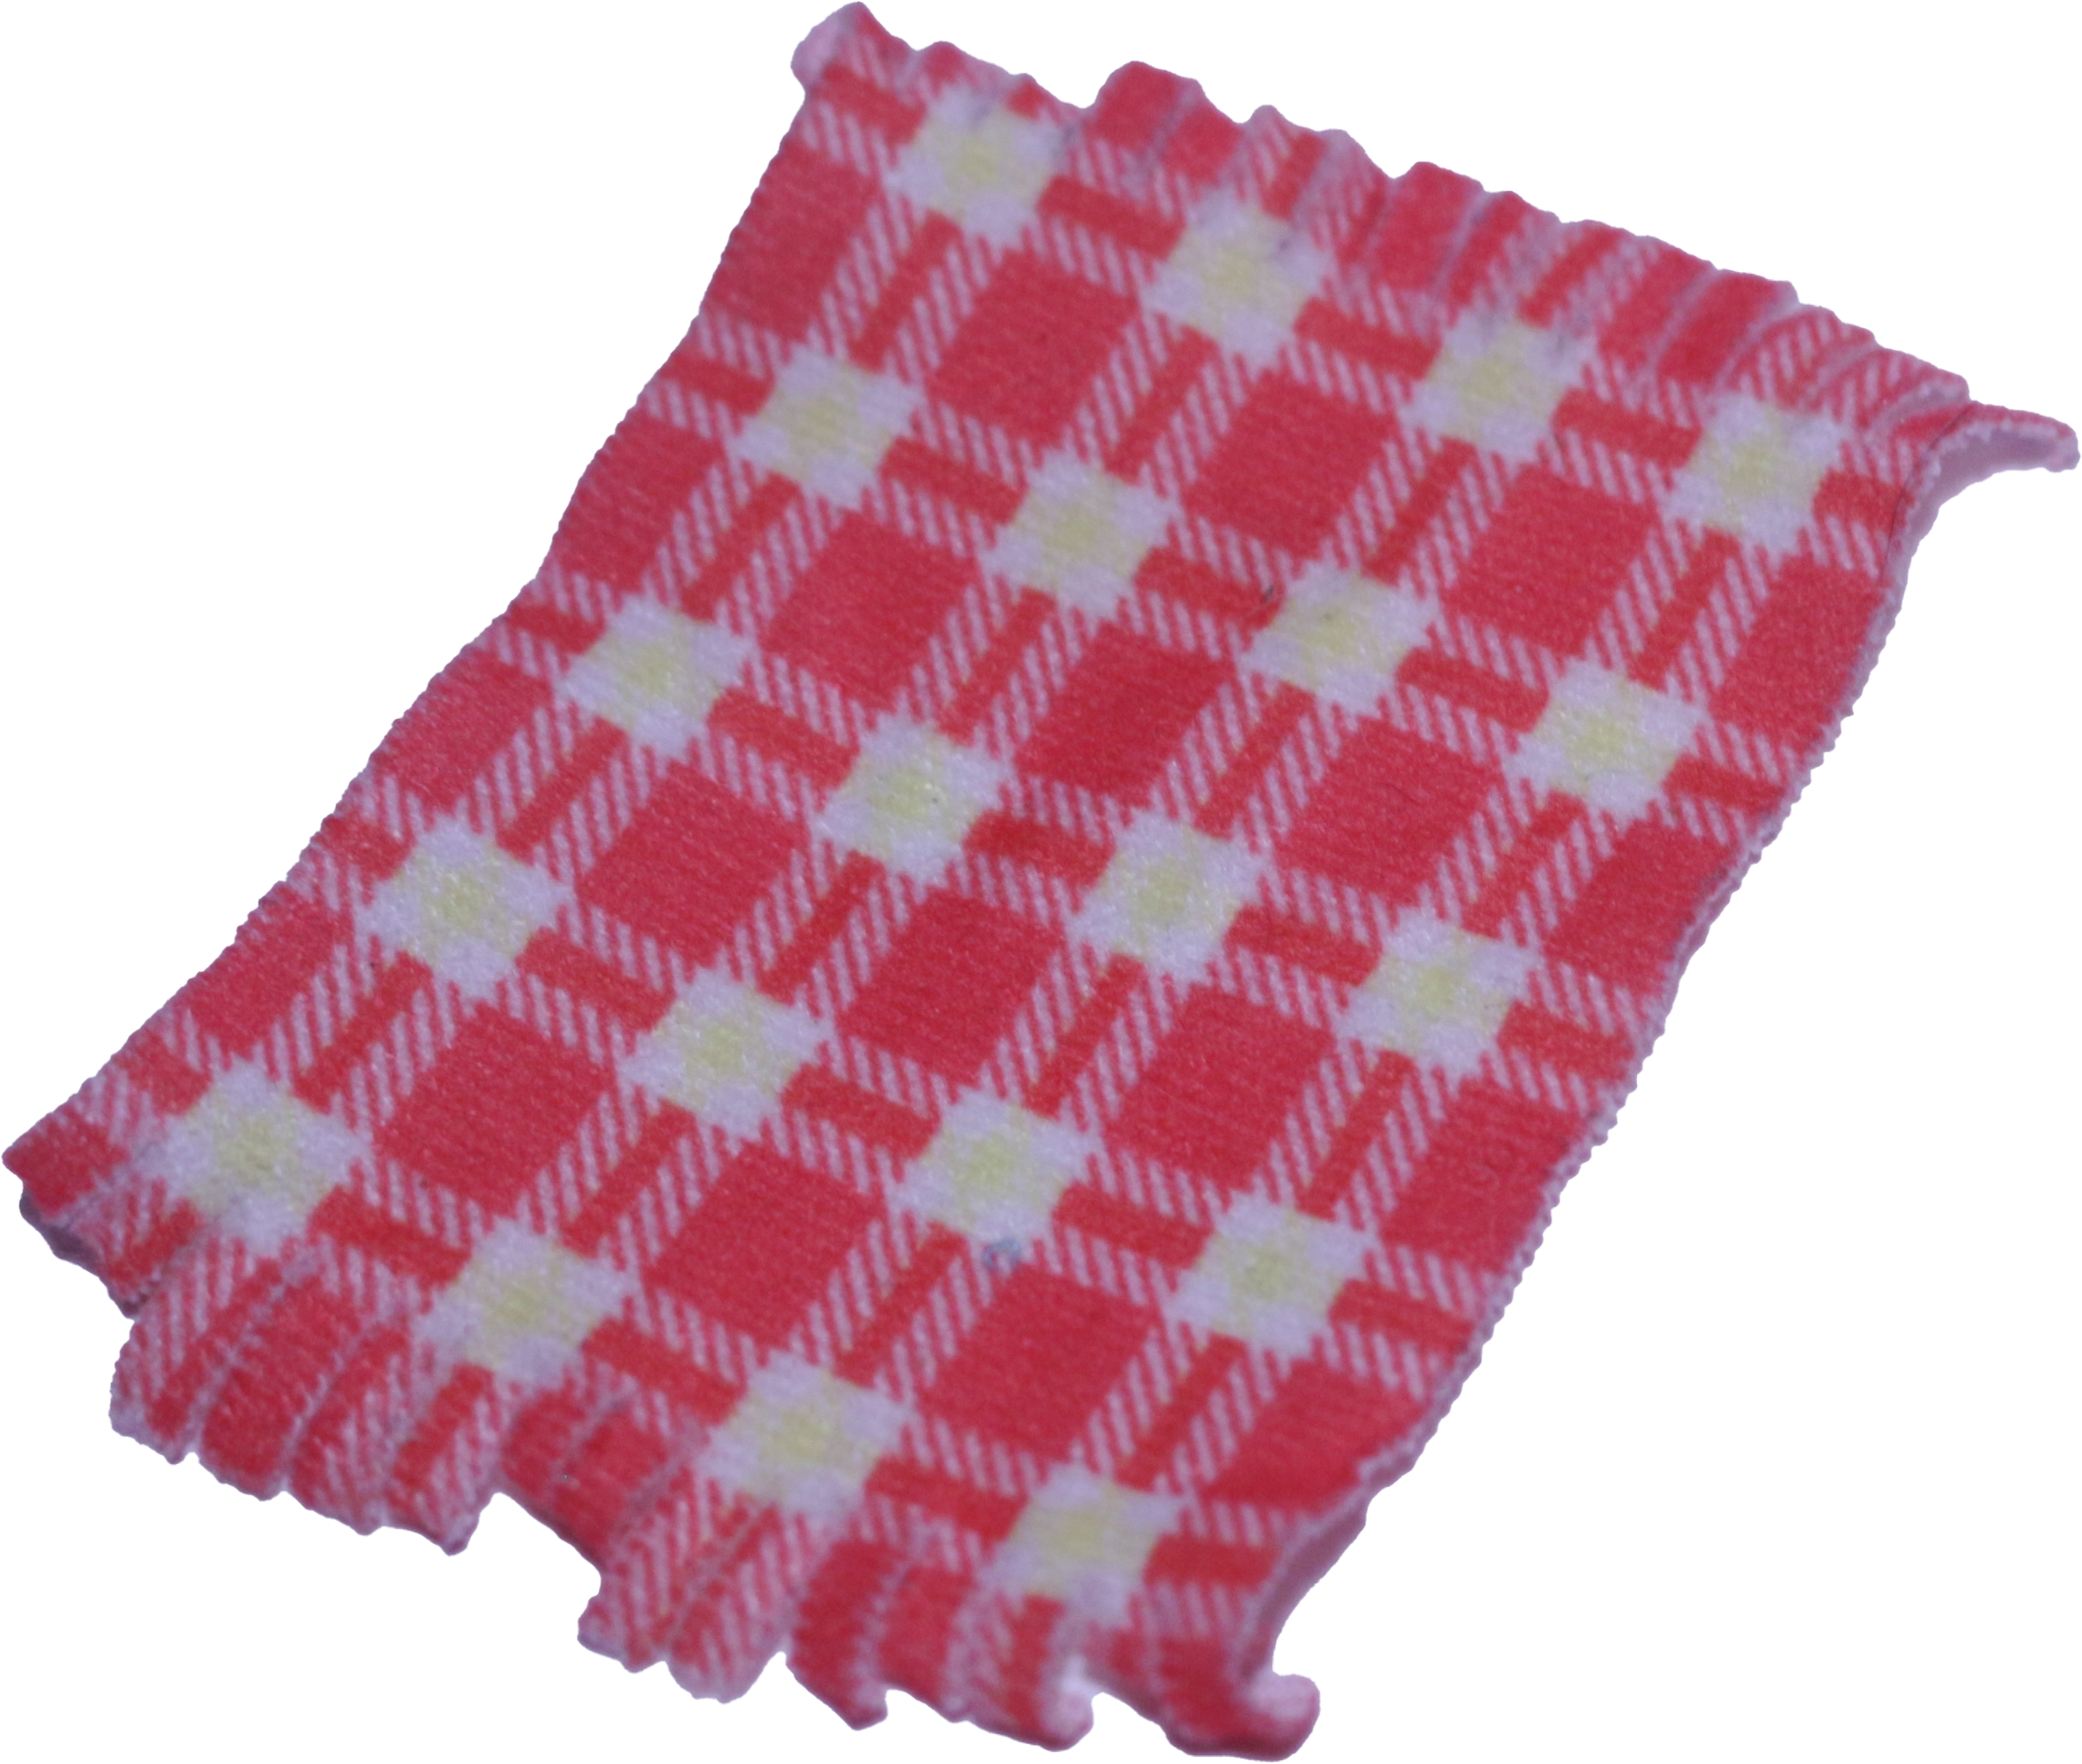 Fabric Picnic Blanket